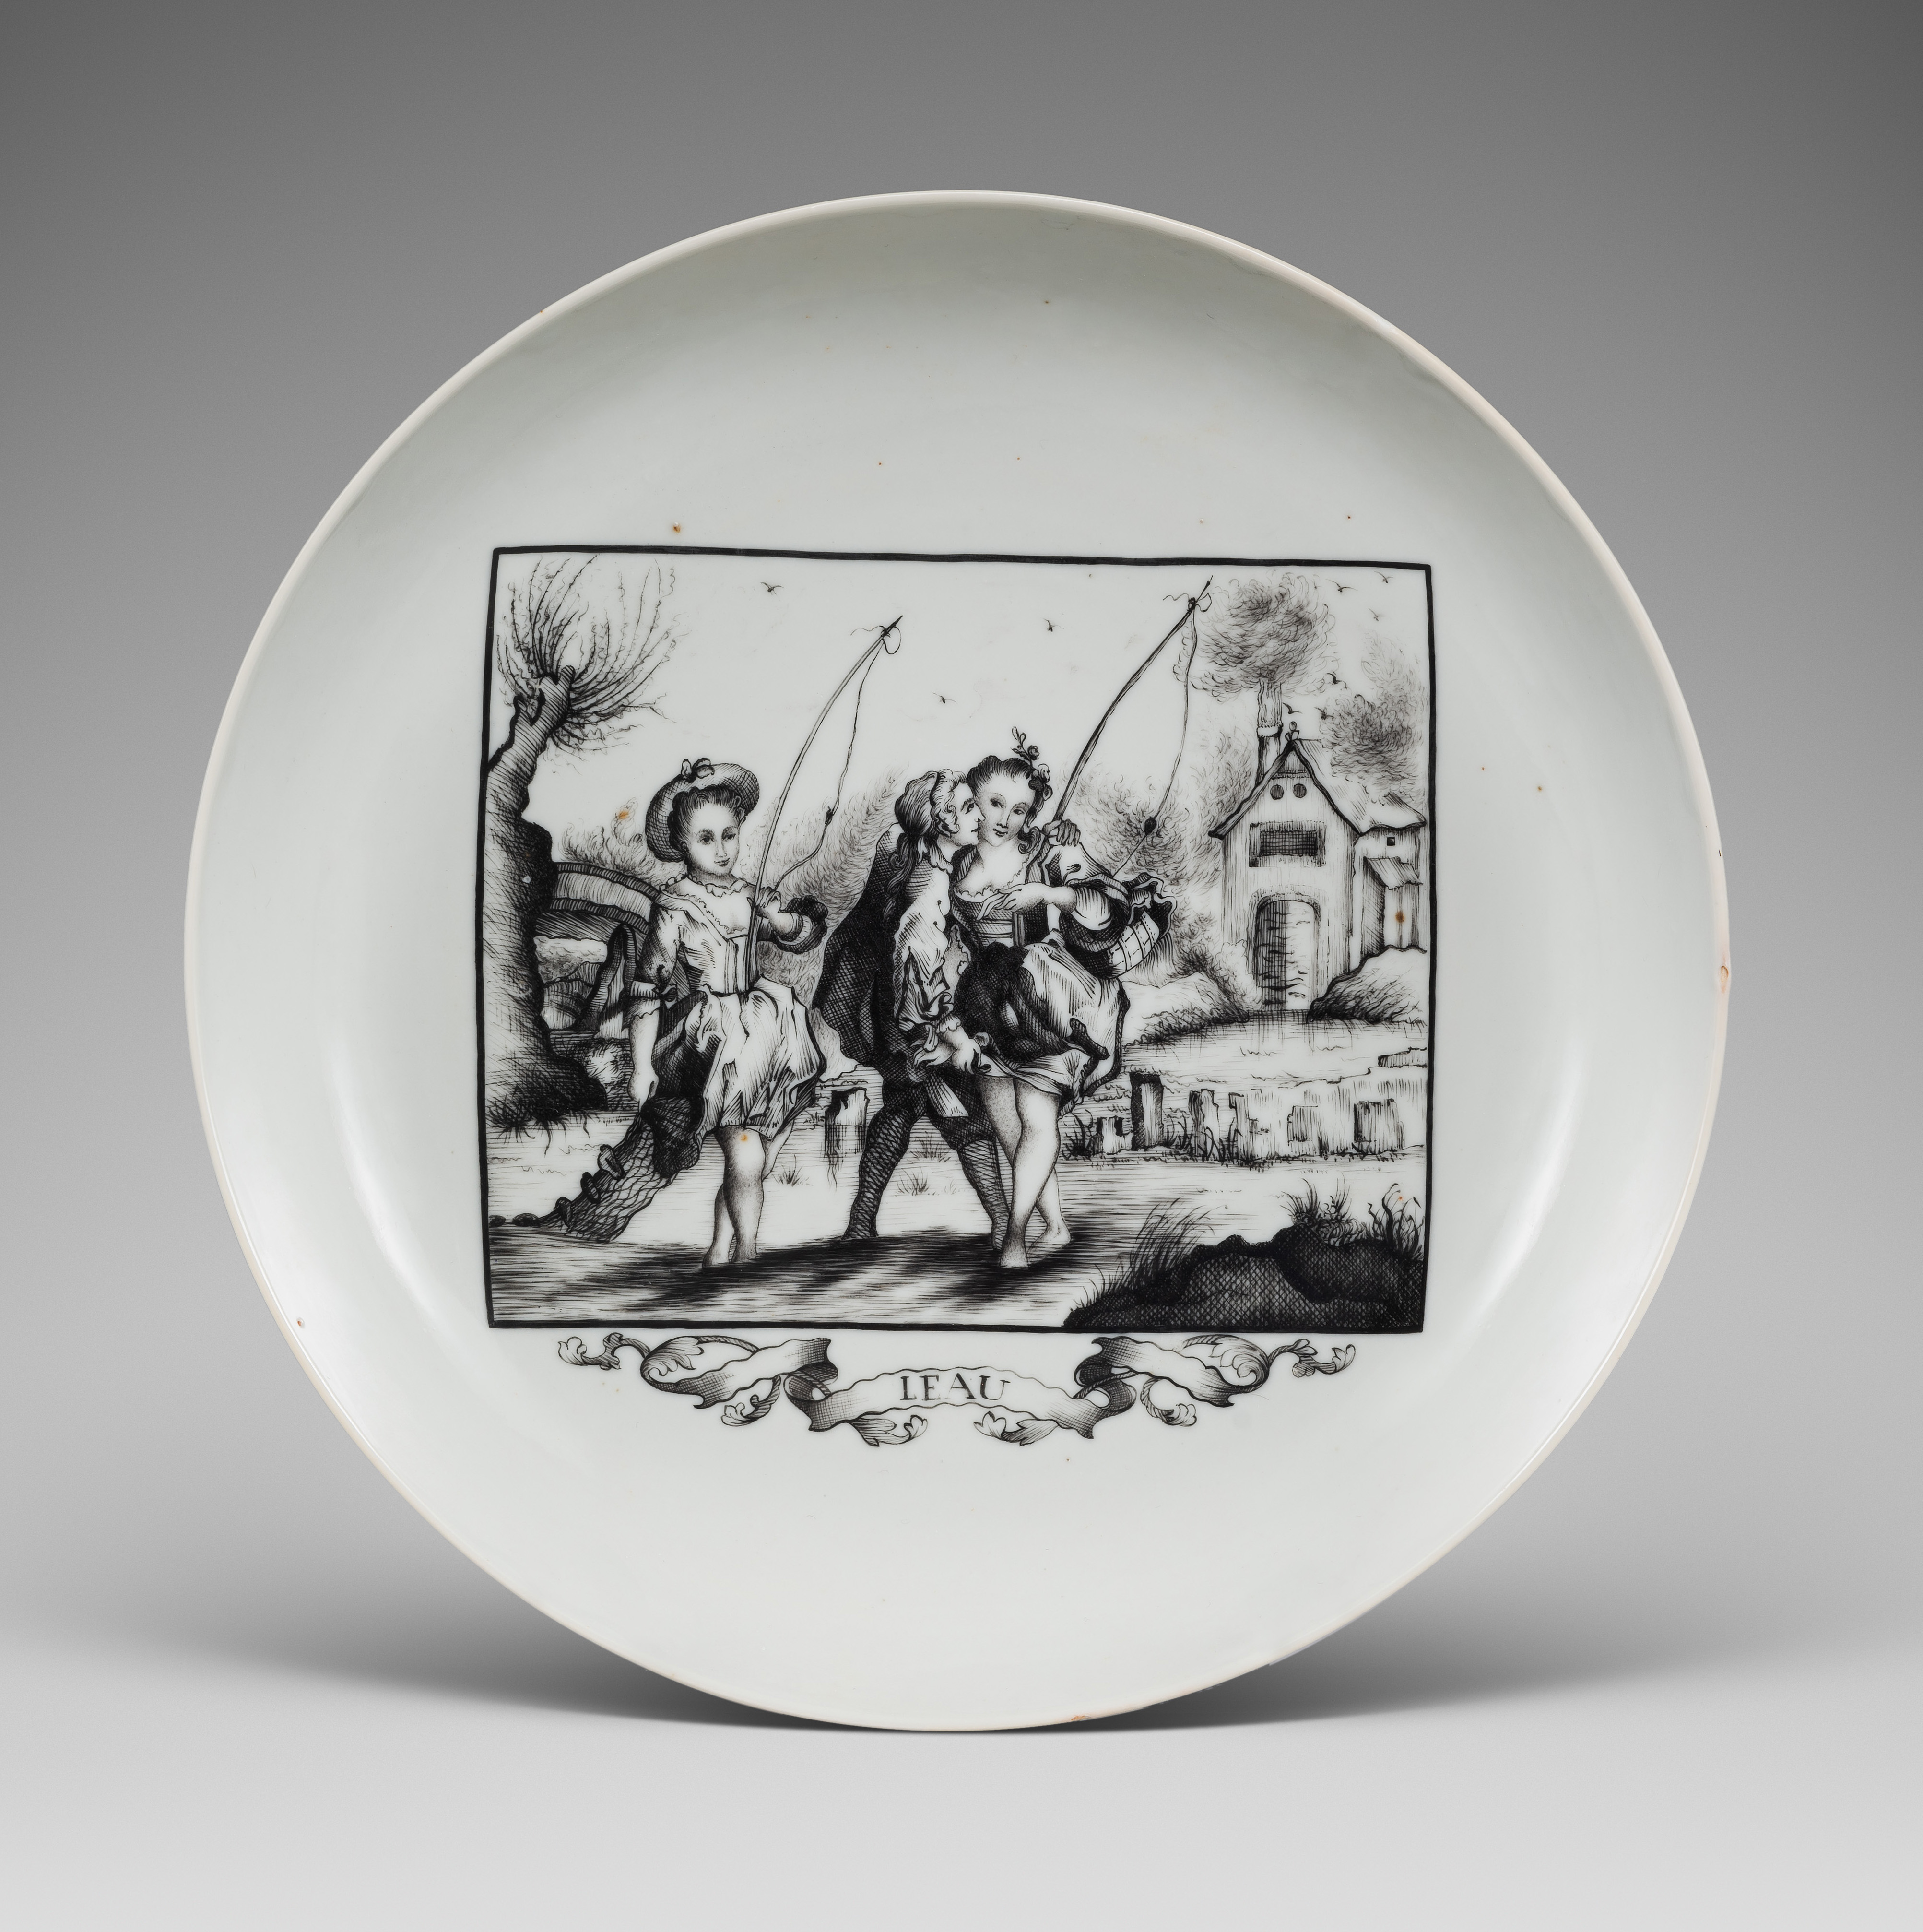 Porcelaine Qianlong period (1736-1795), ca. 1770, Chine